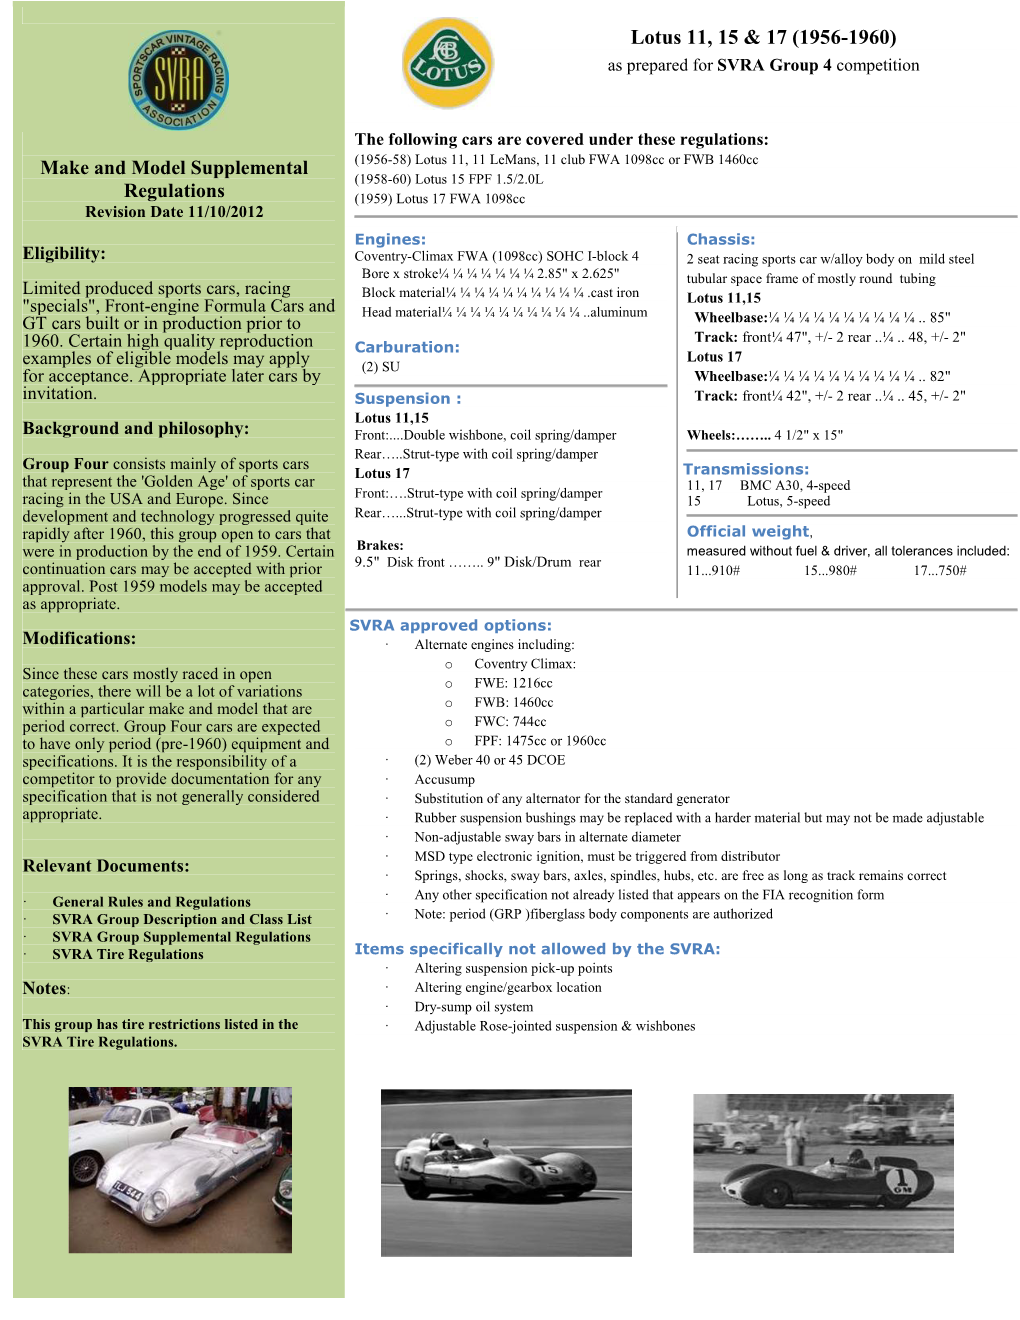 Make and Model Supplemental Regulations Lotus 11, 15 & 17